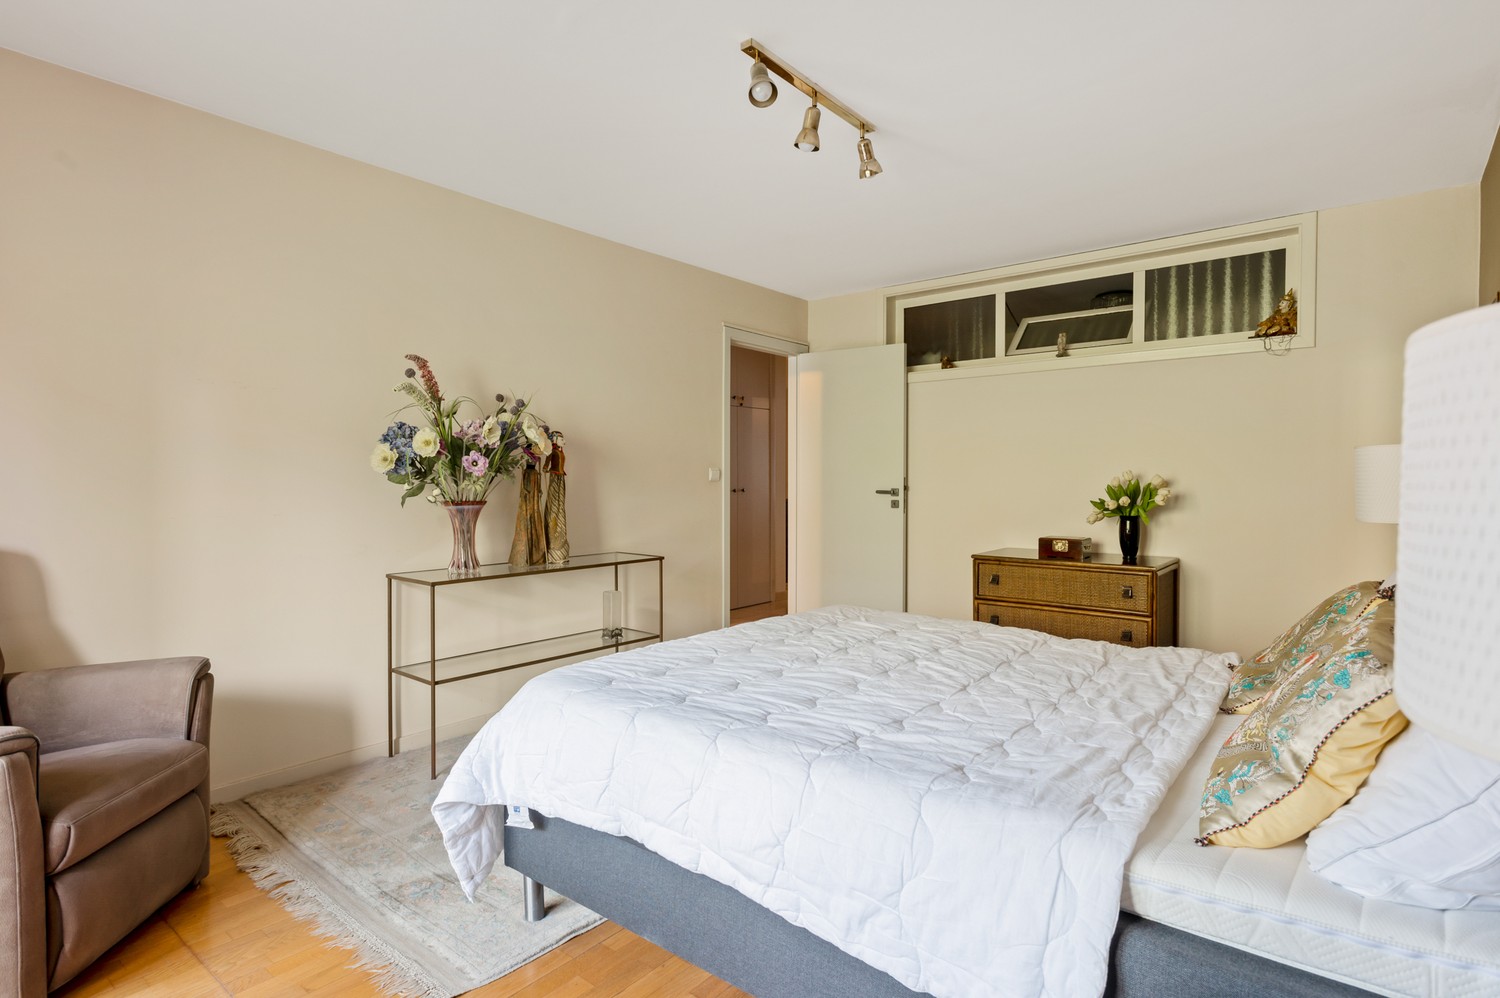 Ruim appartement met twee slaapkamers op ideale locatie in Deurne! afbeelding 14